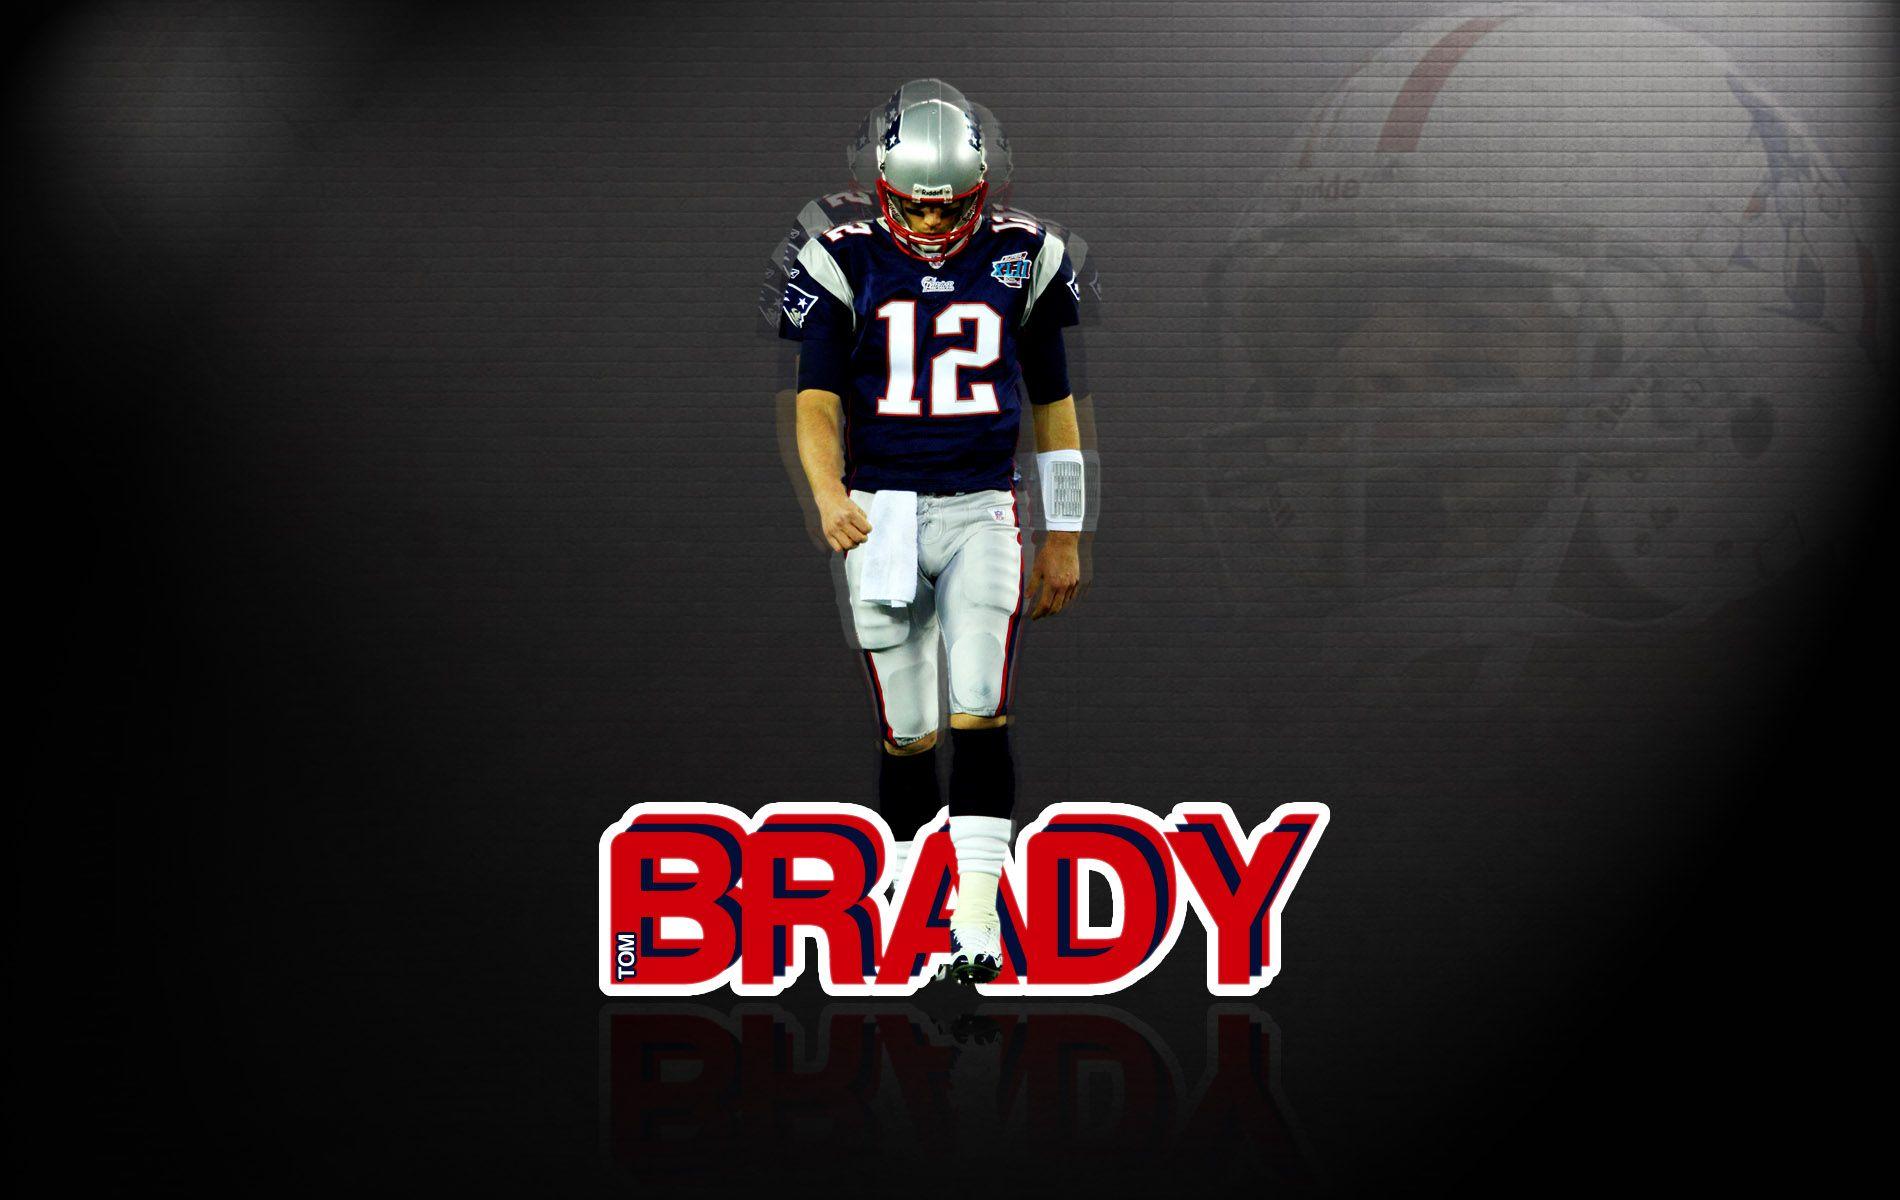 Tom Brady Patriots HD Wallpaper For iPhone - 2023 NFL Football Wallpapers   New england patriots wallpaper, Tom brady patriots, Nfl football wallpaper